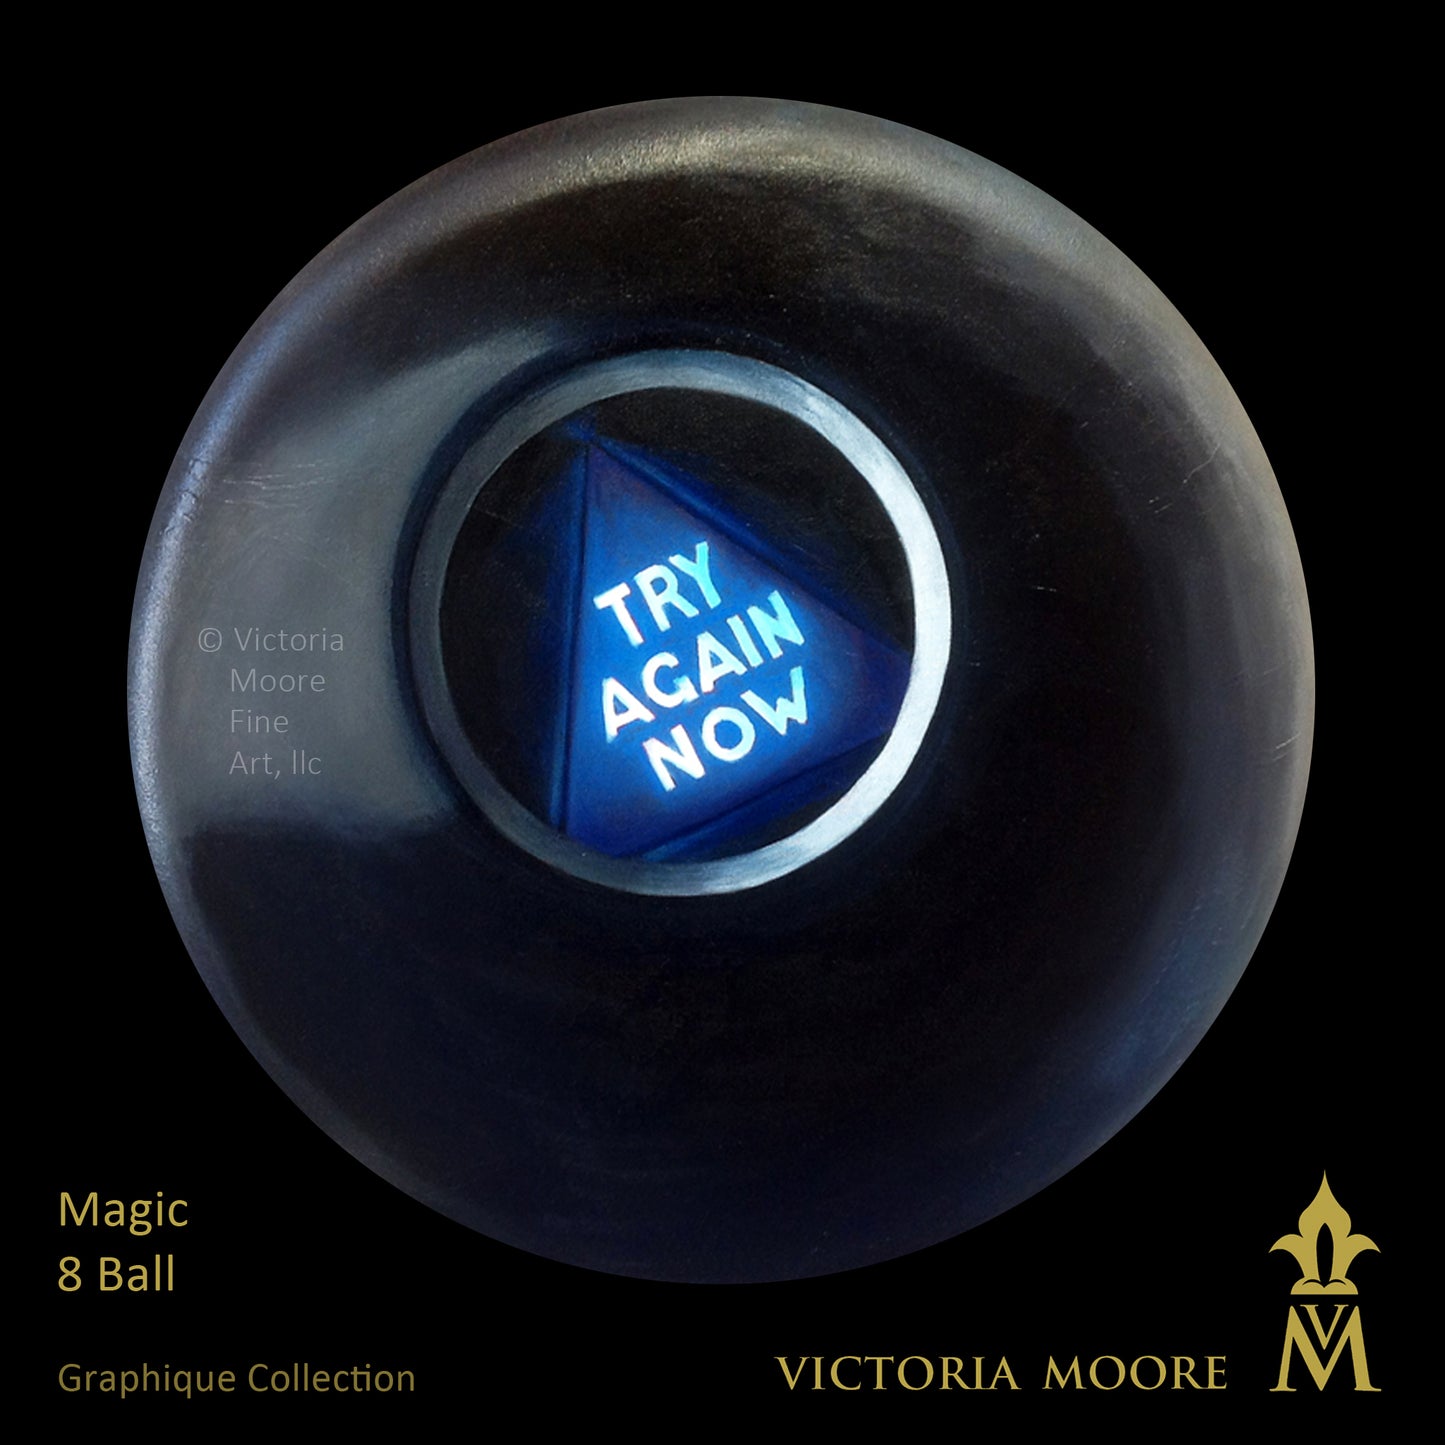 Magic 8 Ball:“Try Again Now” - Artistic Transfer, LLC